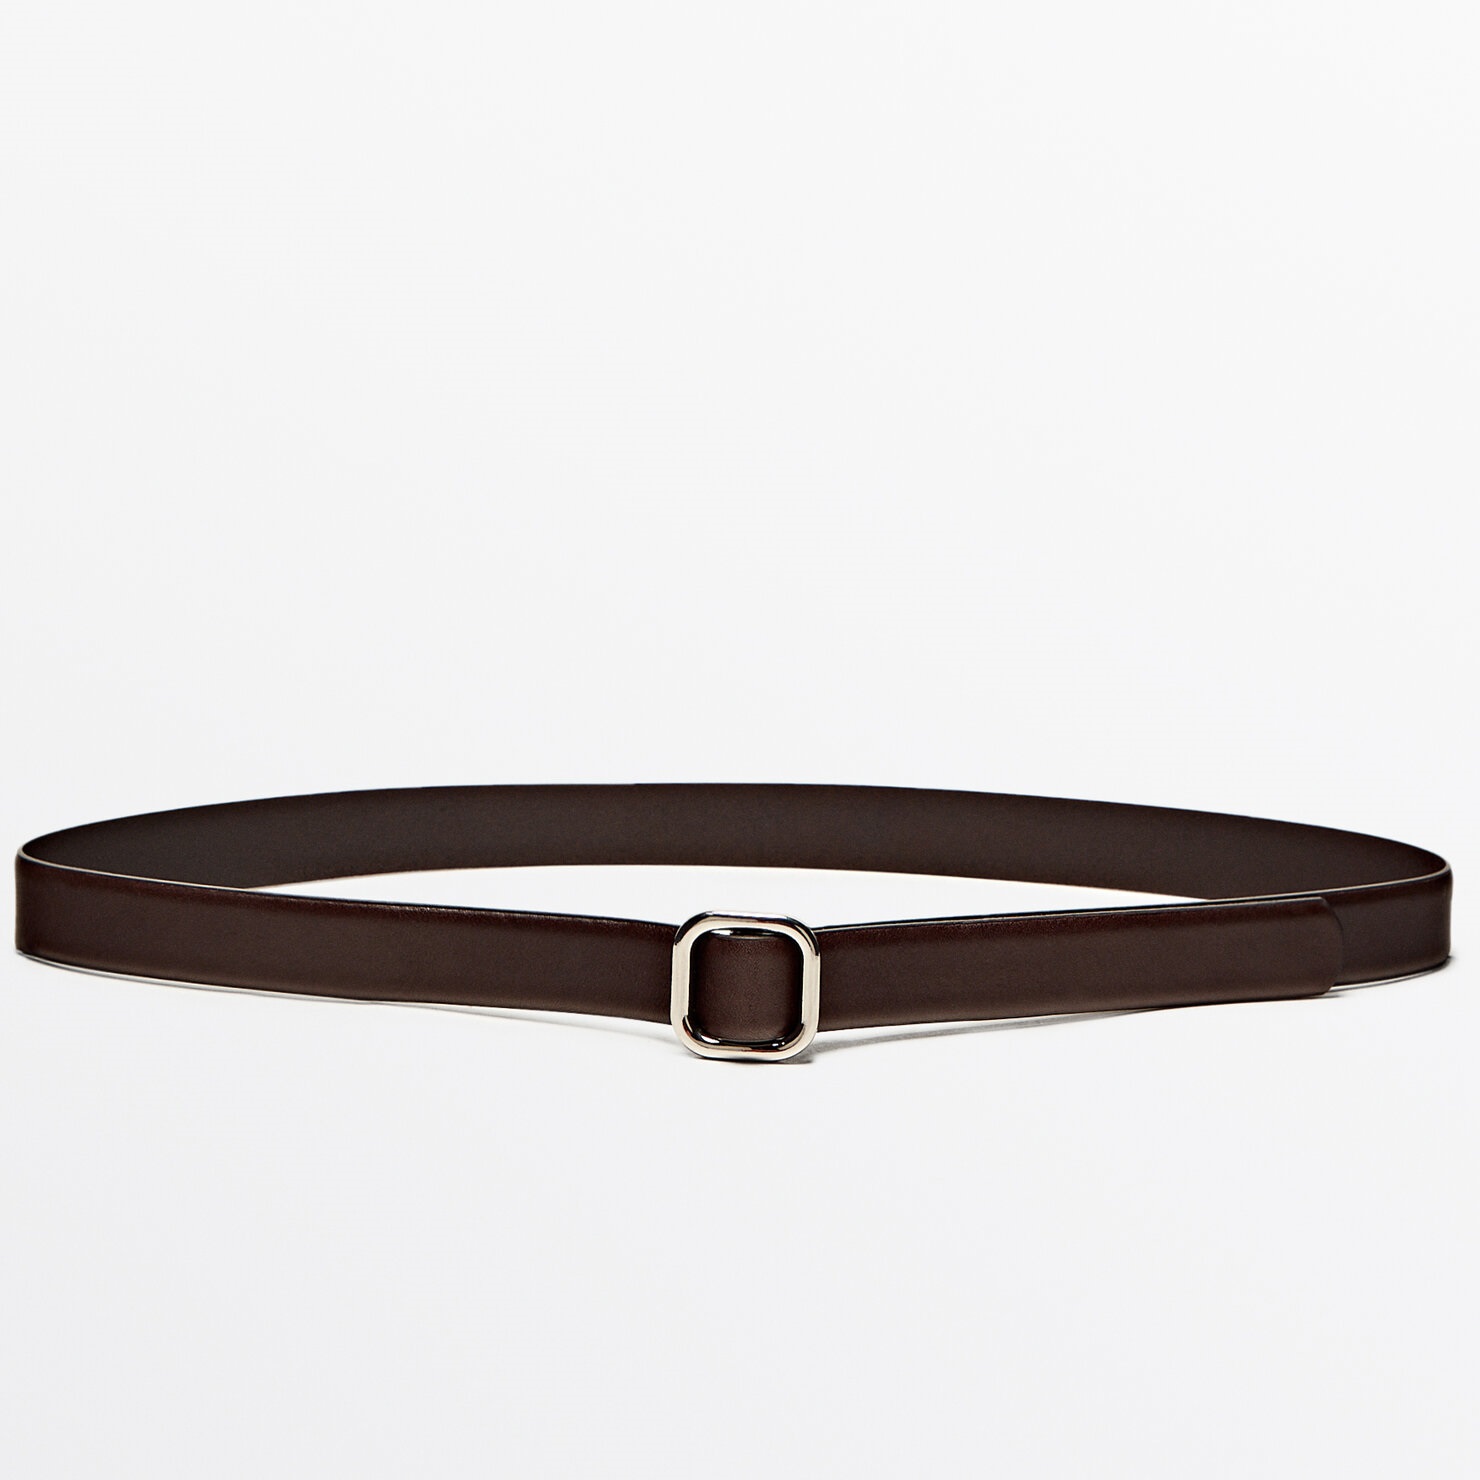 Ремень Massimo Dutti Leather With Square Buckle, темно-коричневый